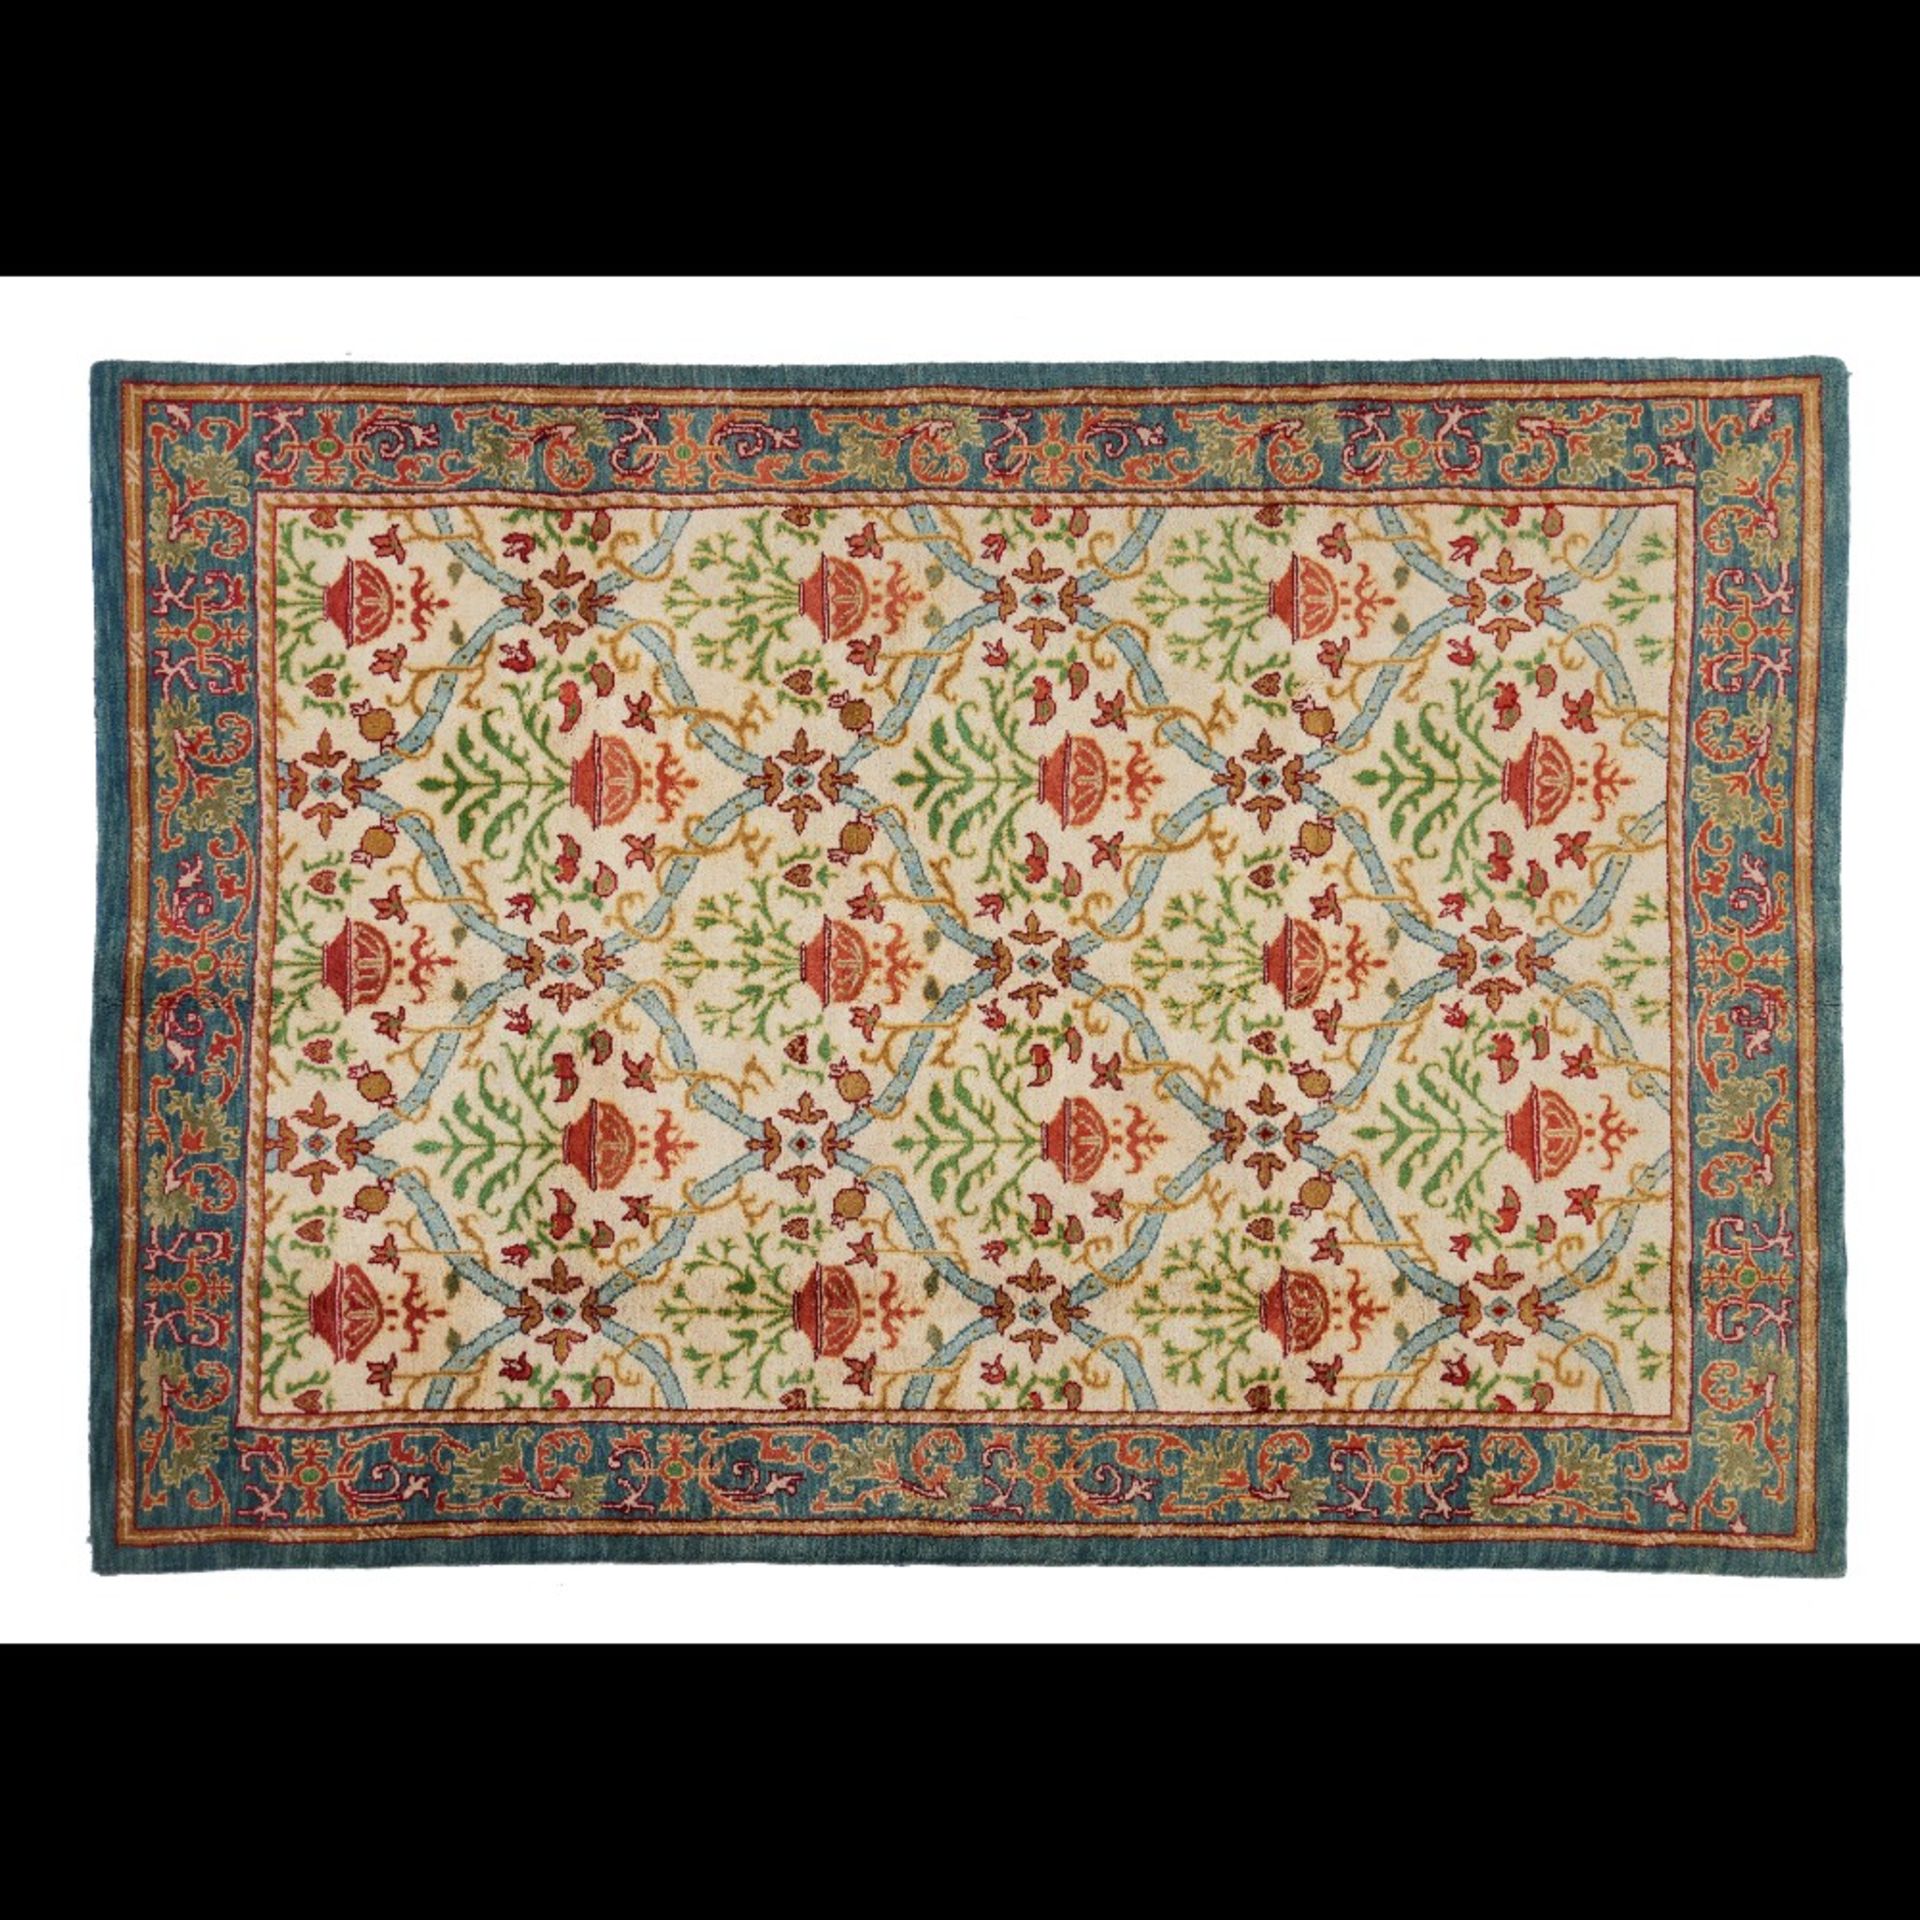  A Ziegler rug, Iran